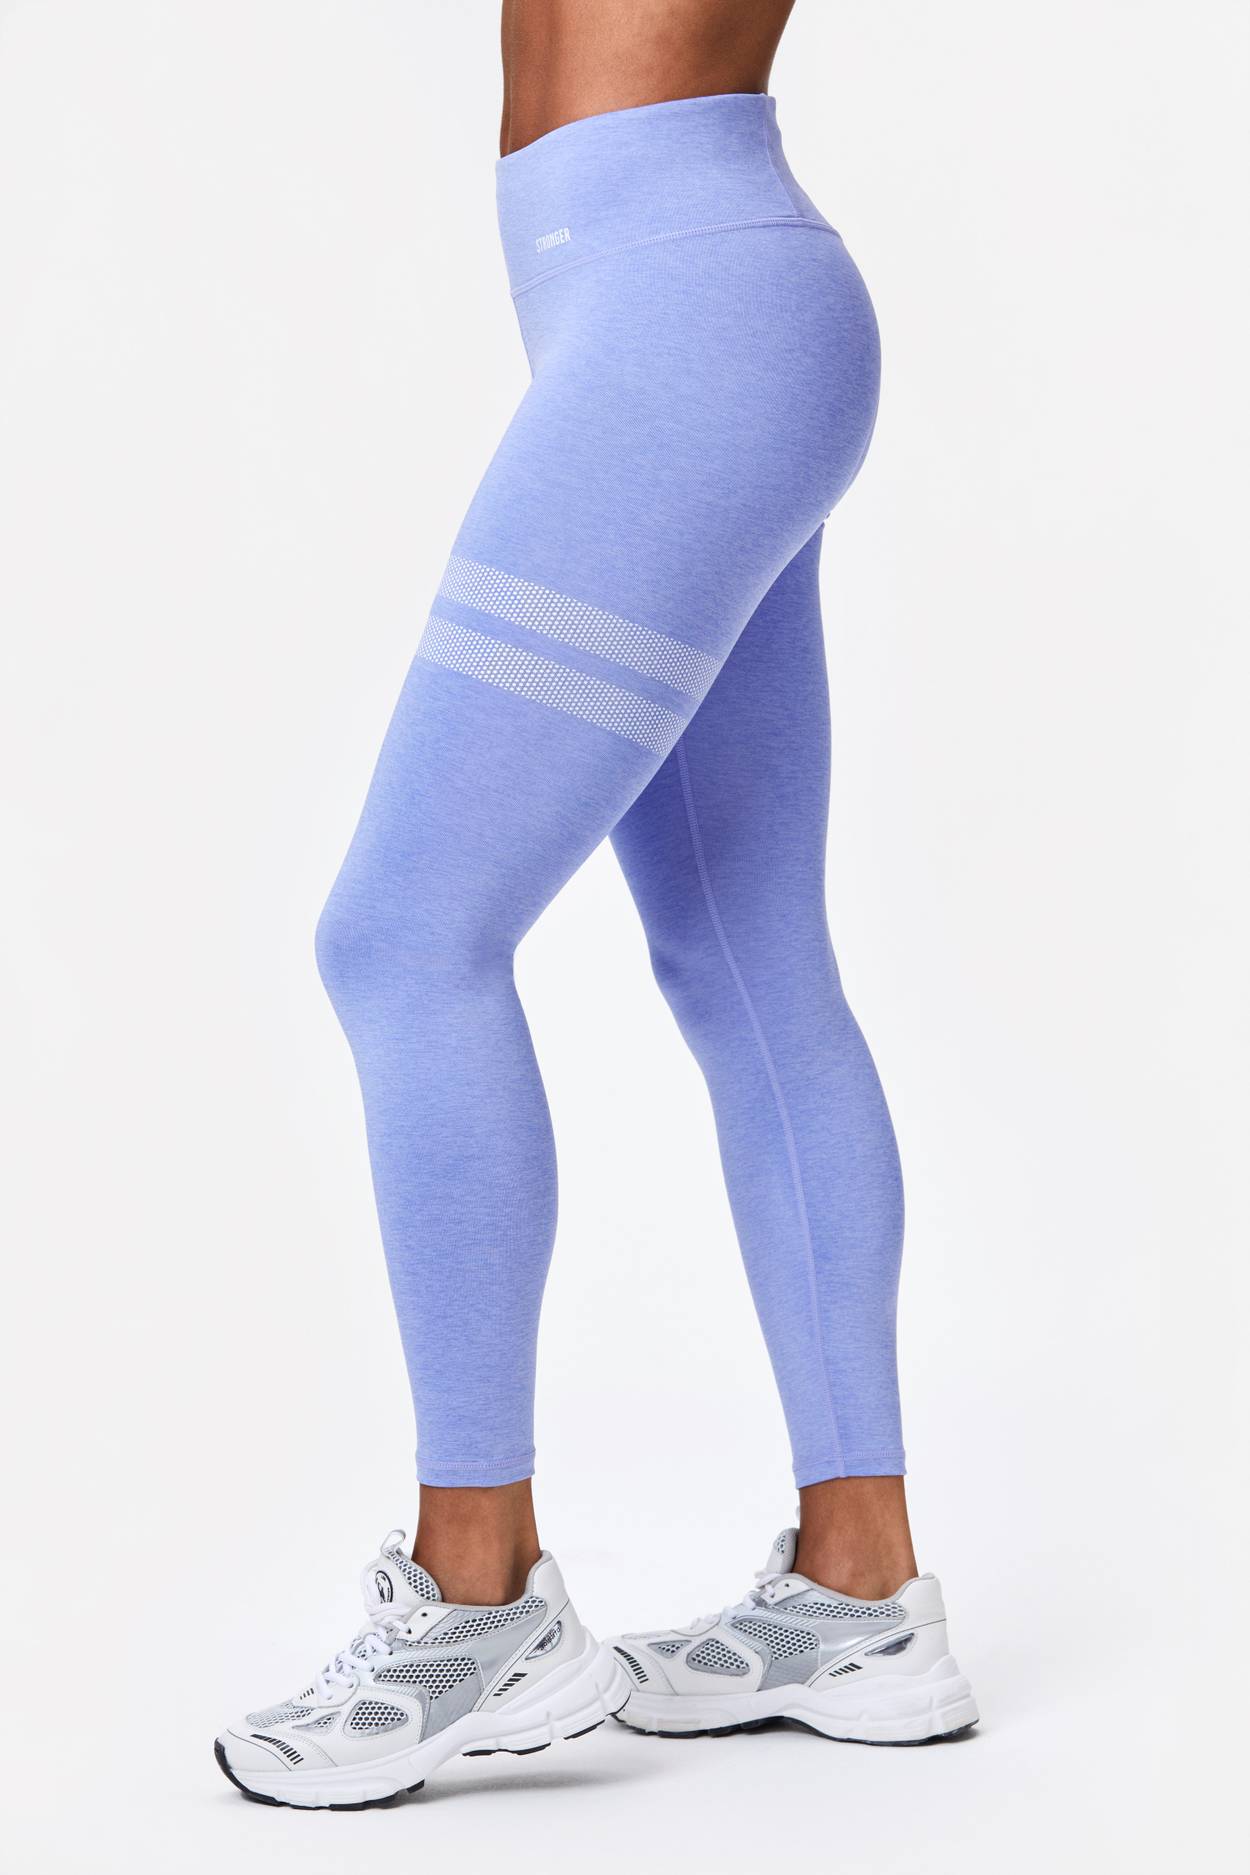 Bombshell Sportswear Elite Seamless Leggings XS / S Womens Blue High Waist